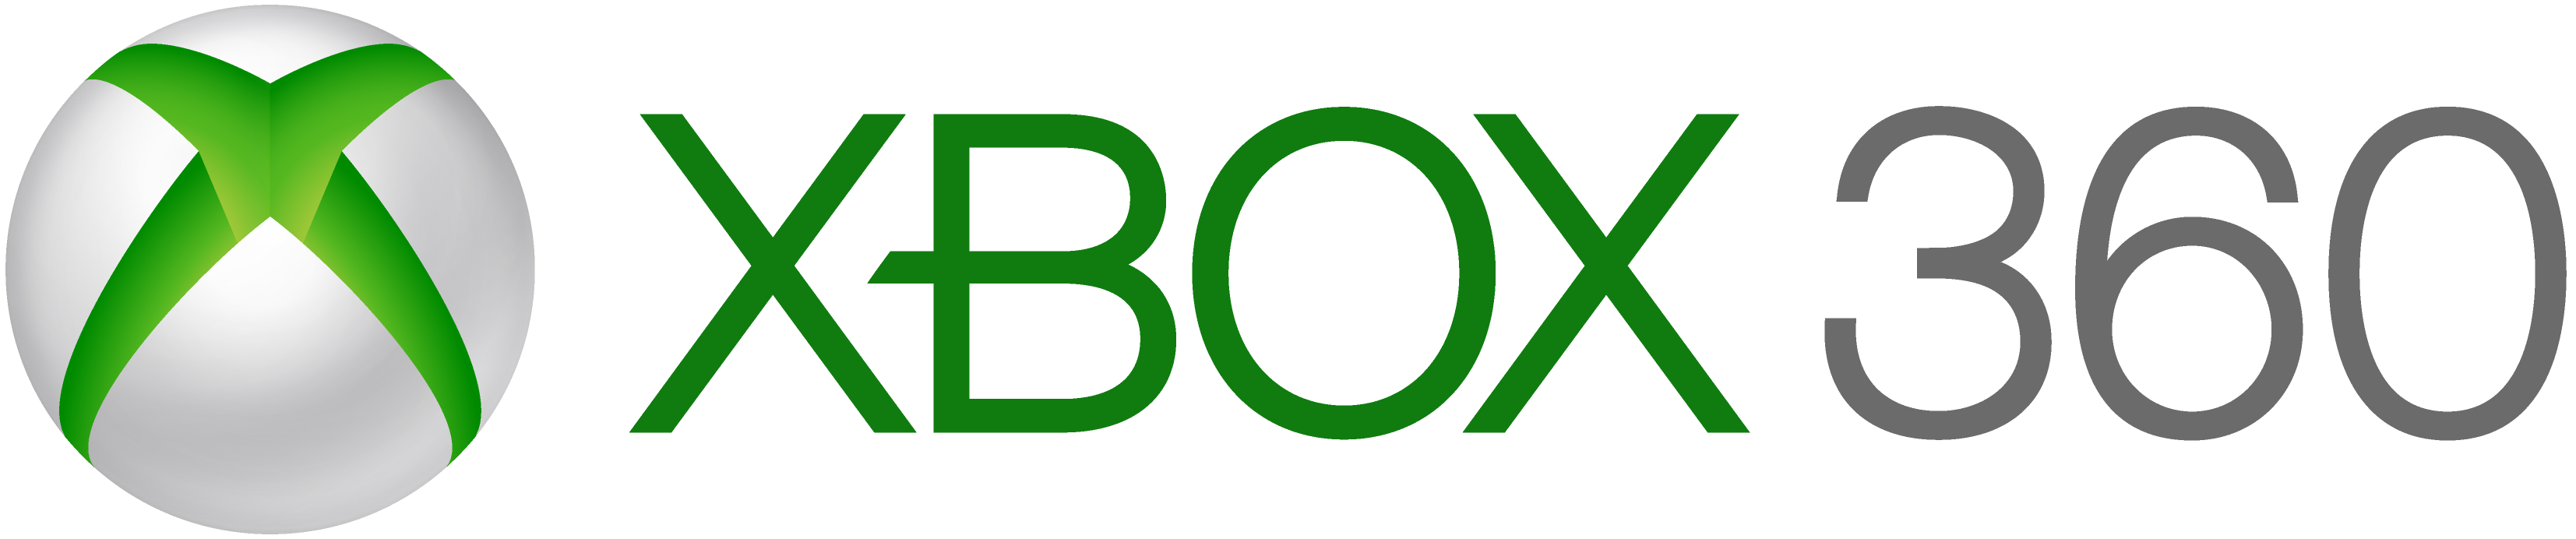 Xbox 360 - Wikipedia